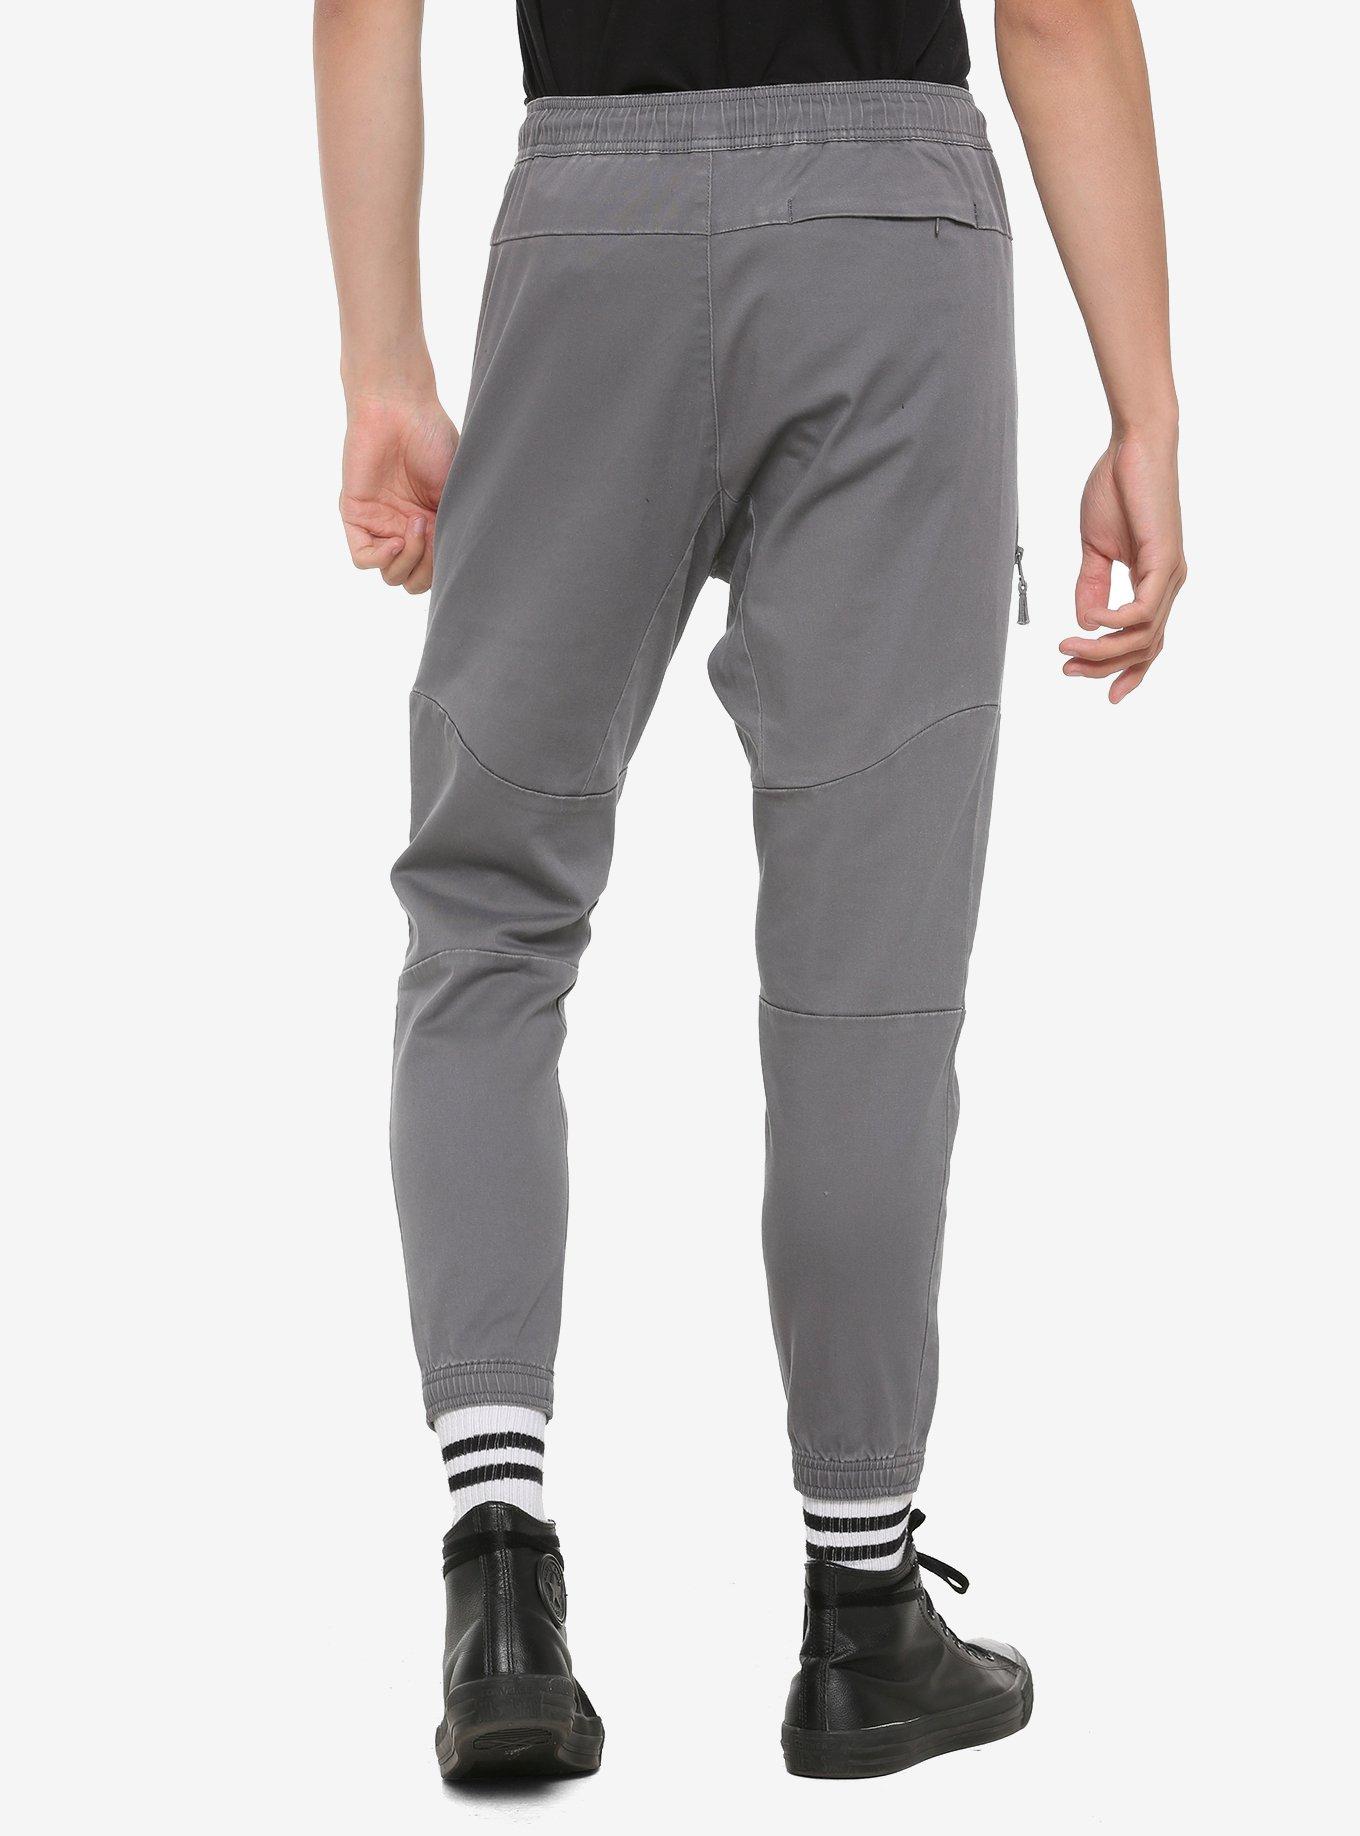 Grey Twill Zipper Jogger Pants, GREY, alternate